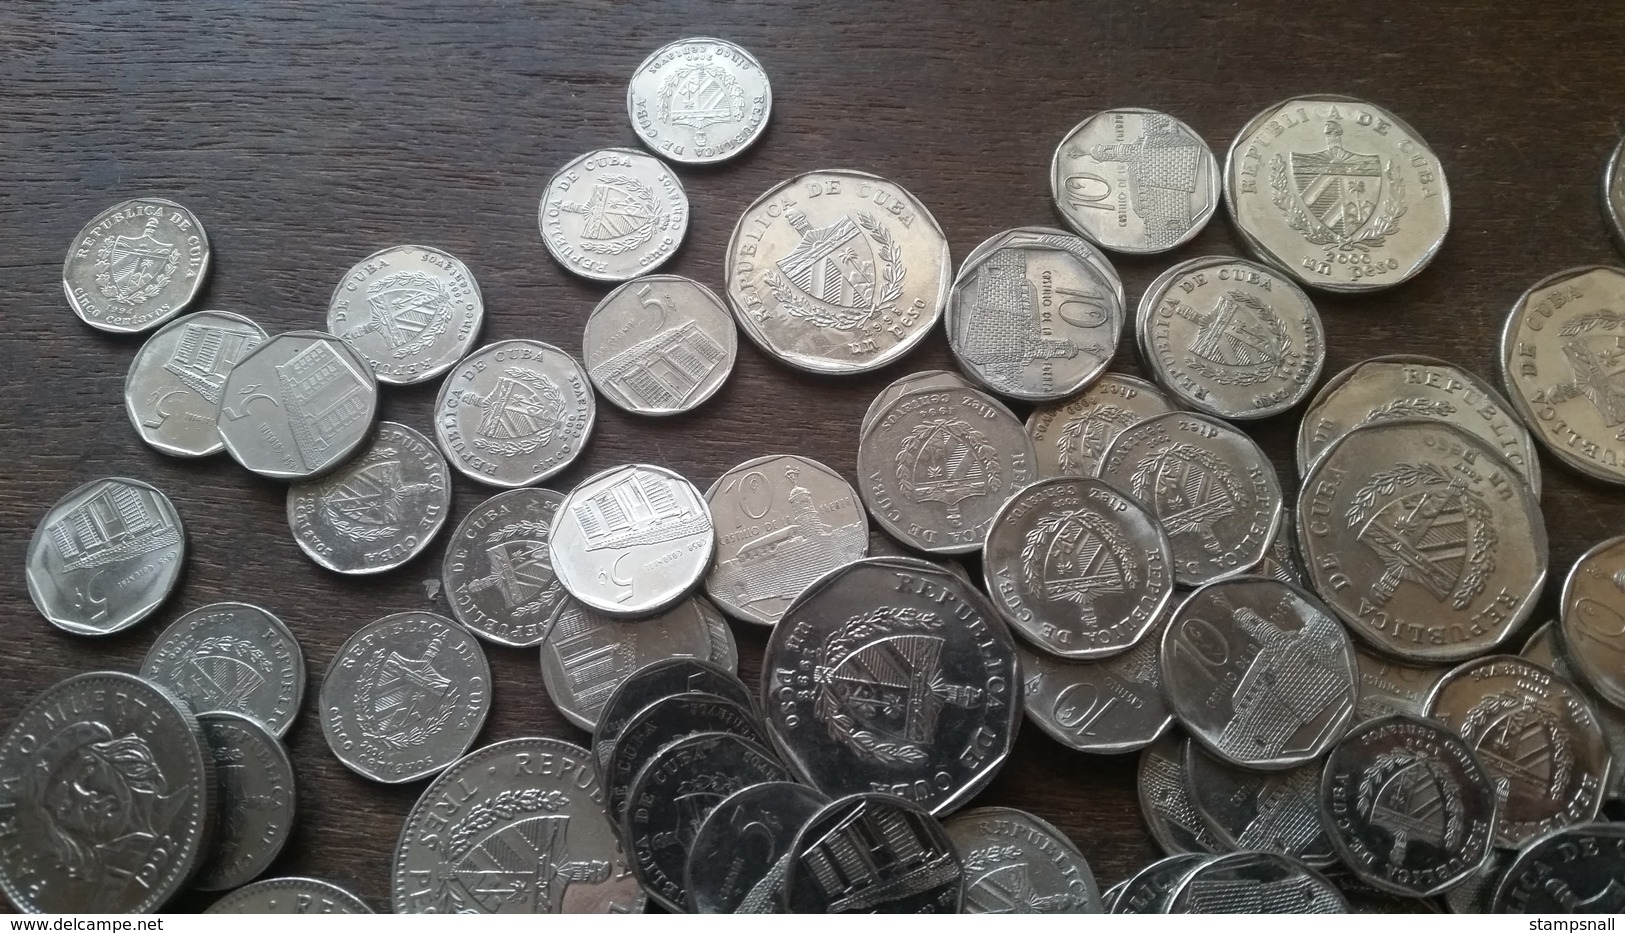 Bulk Lot Of 223 MIXED CUBA COINS Dates UNCHECKED. Weight - 988 Grams. Lot No 1 - Cuba